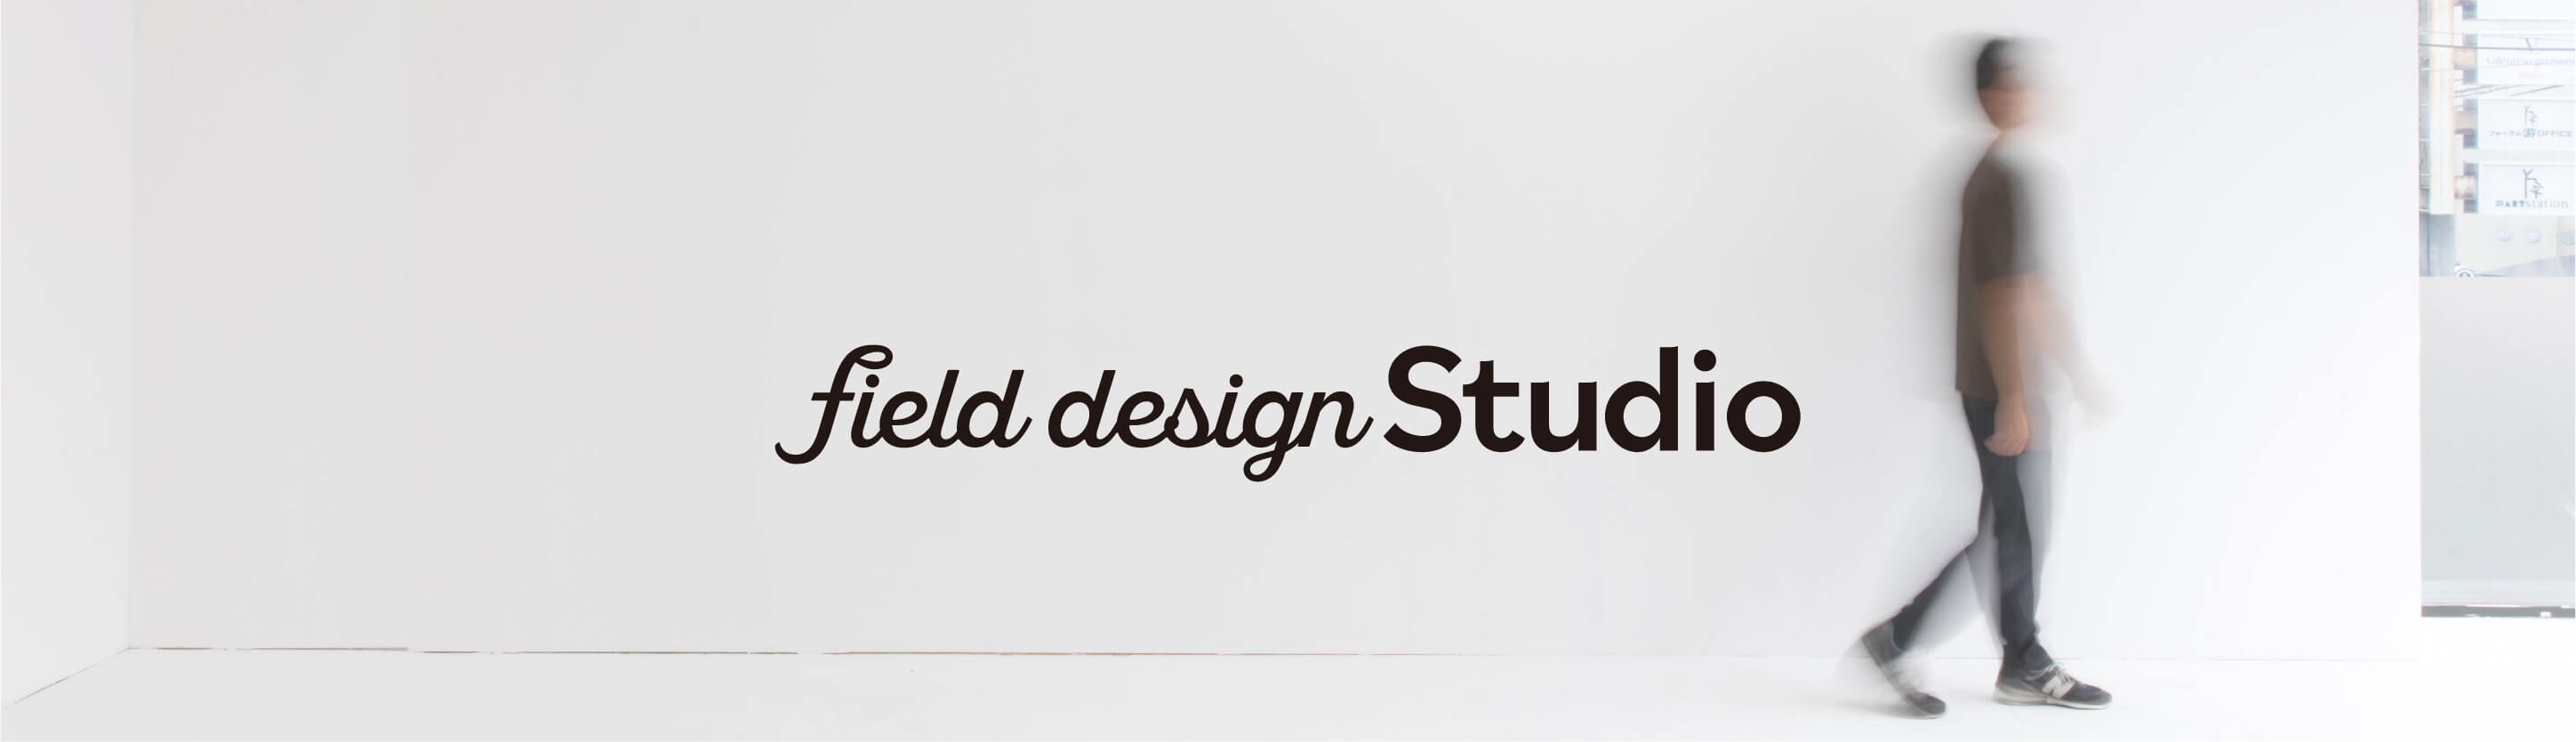 field design Studio